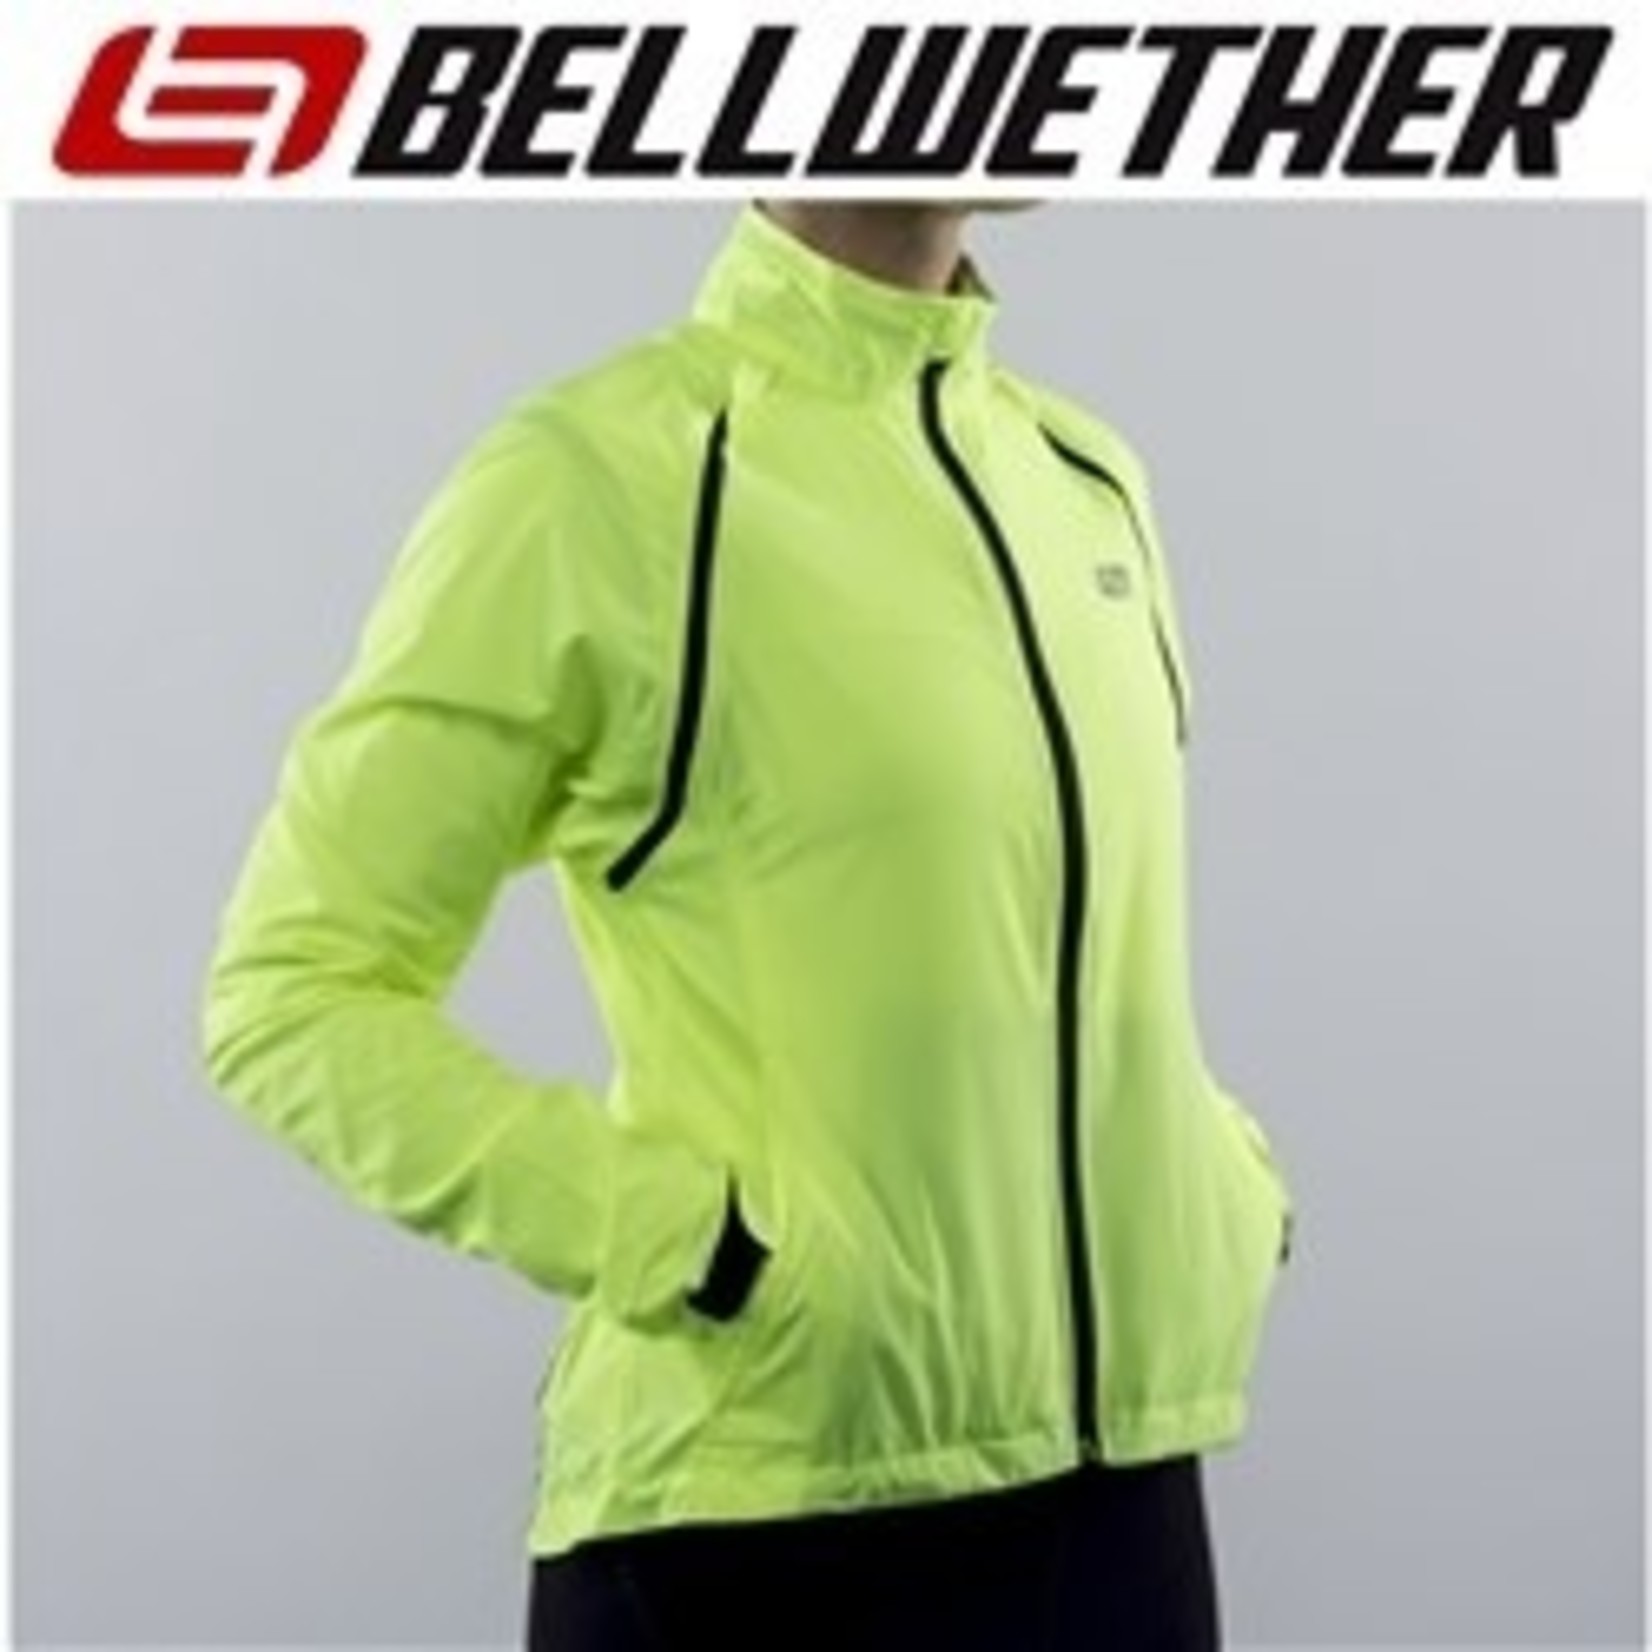 Bellwether Bellwether Cycling Jacket - Velocity Women's Convertible Jacket/Vest - Hi-Vis